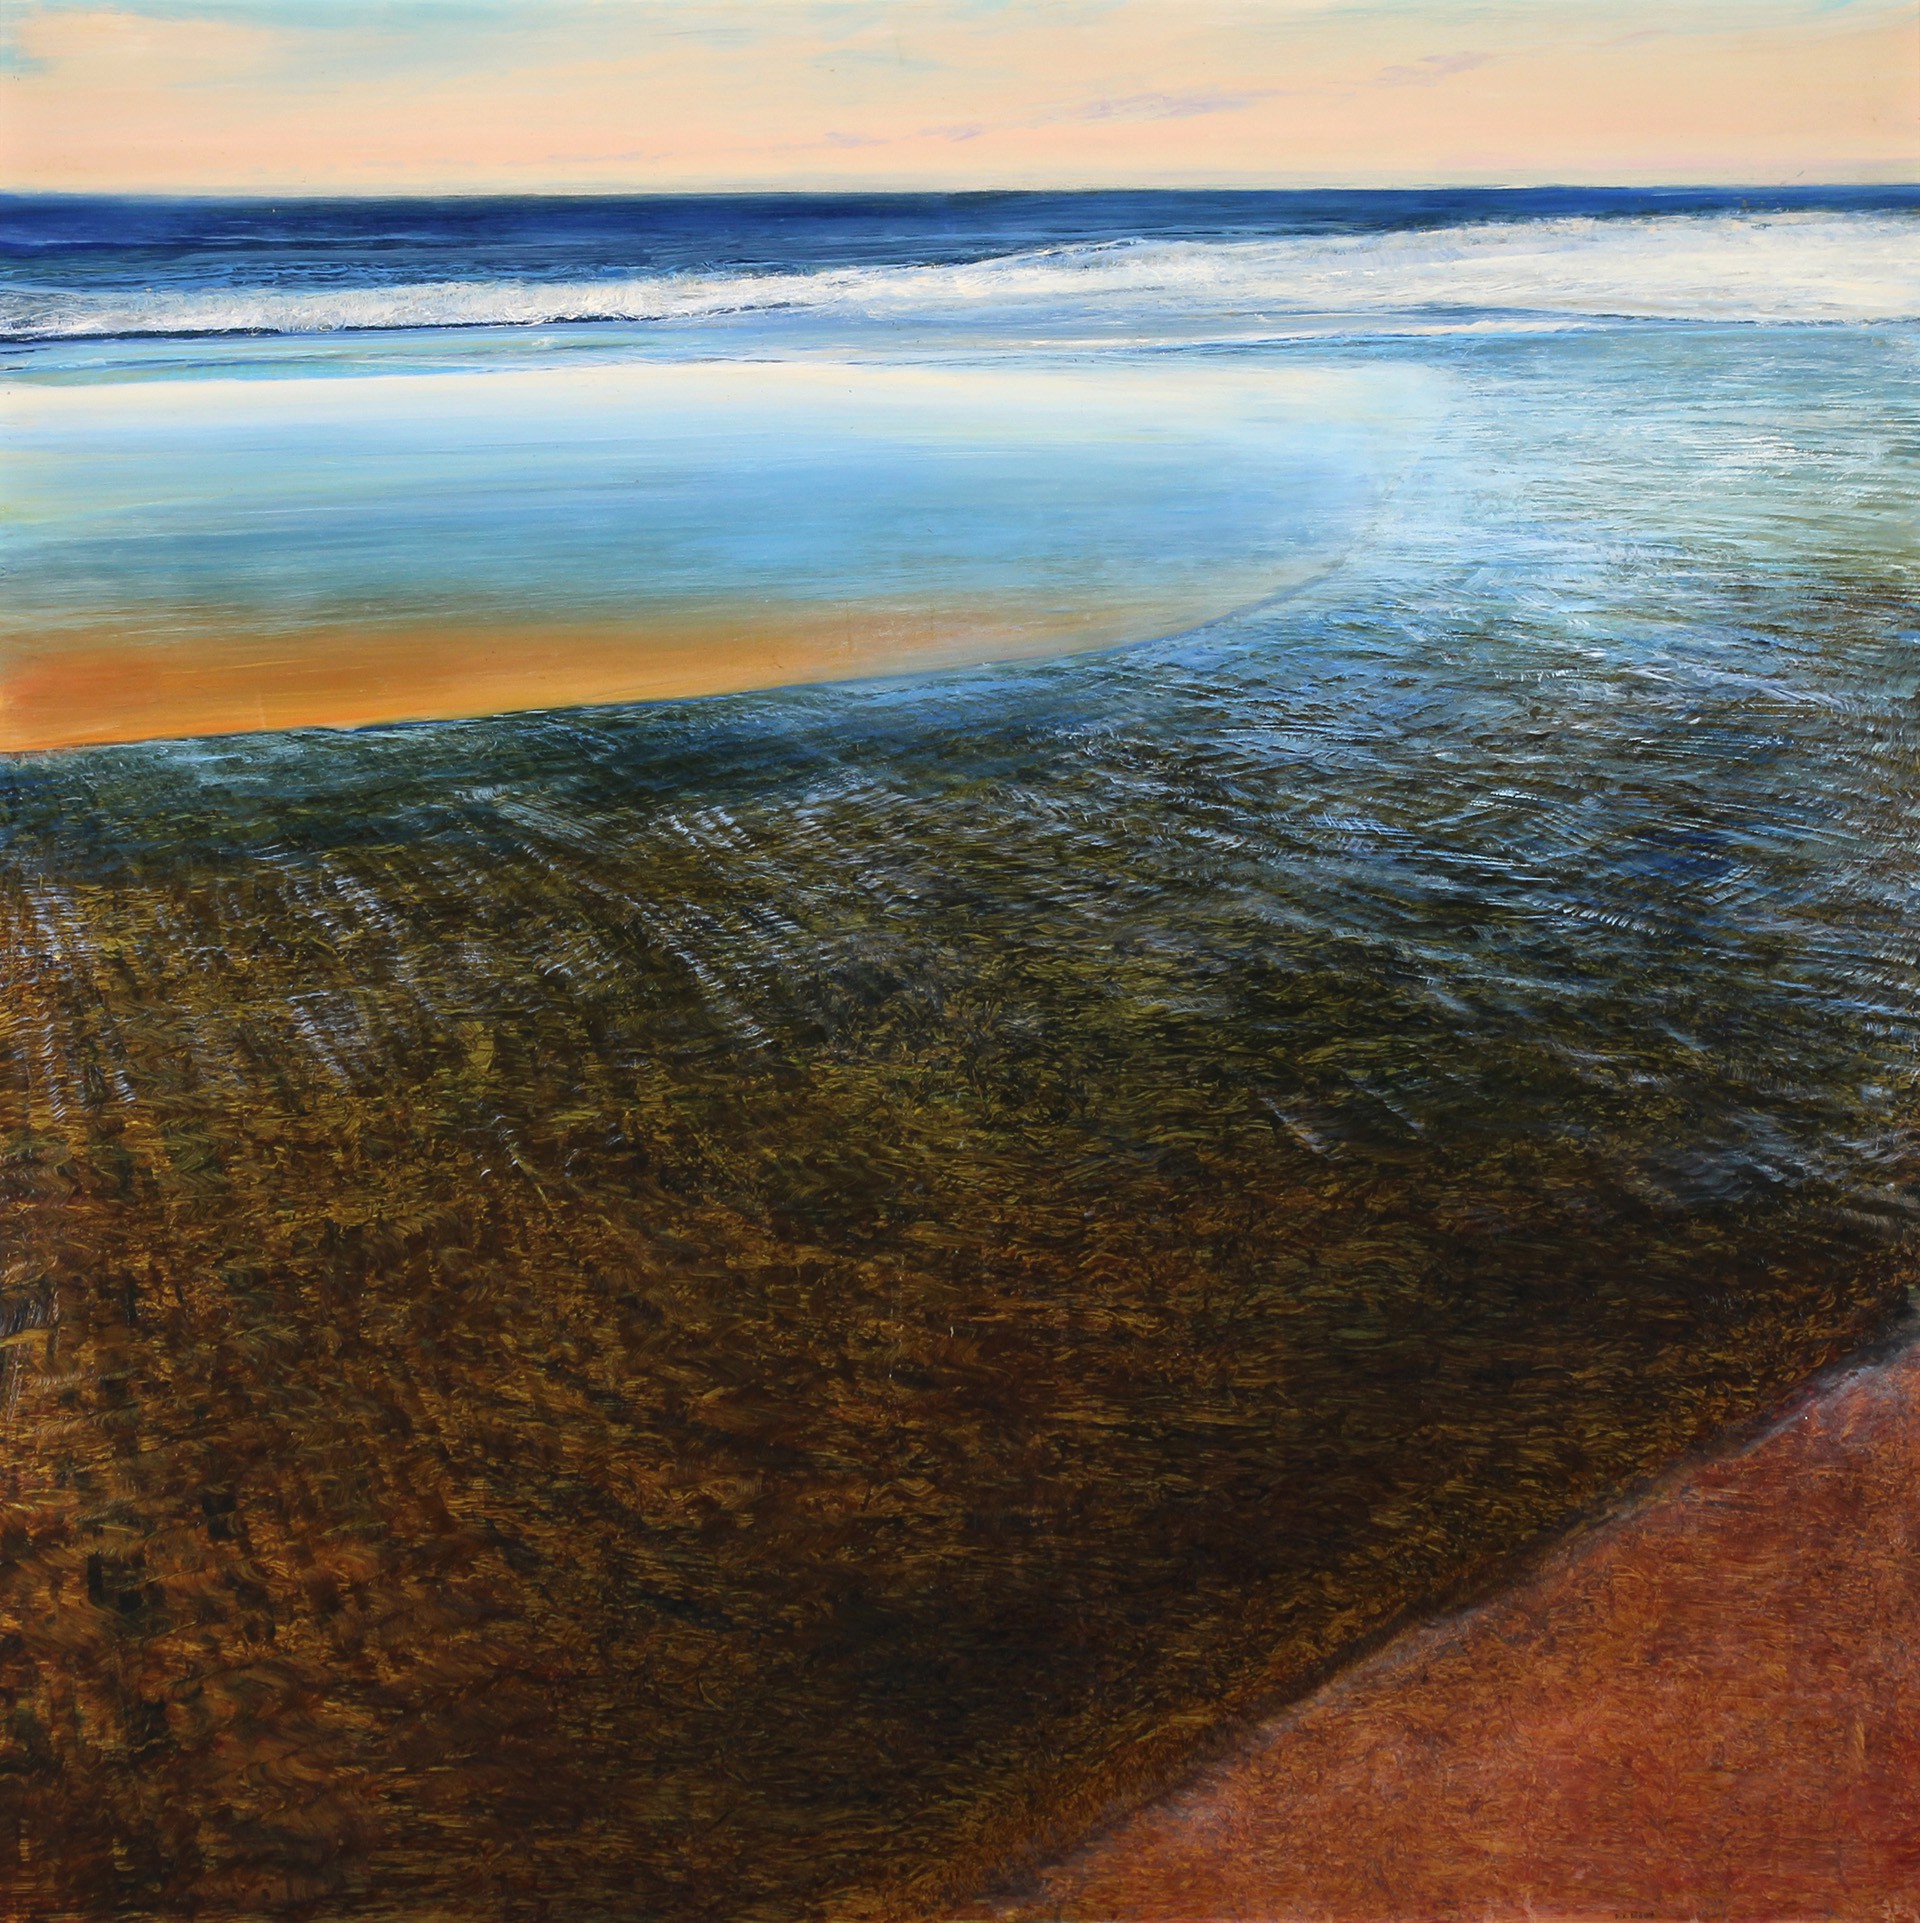 Translucent Shoreline by David Allen Dunlop